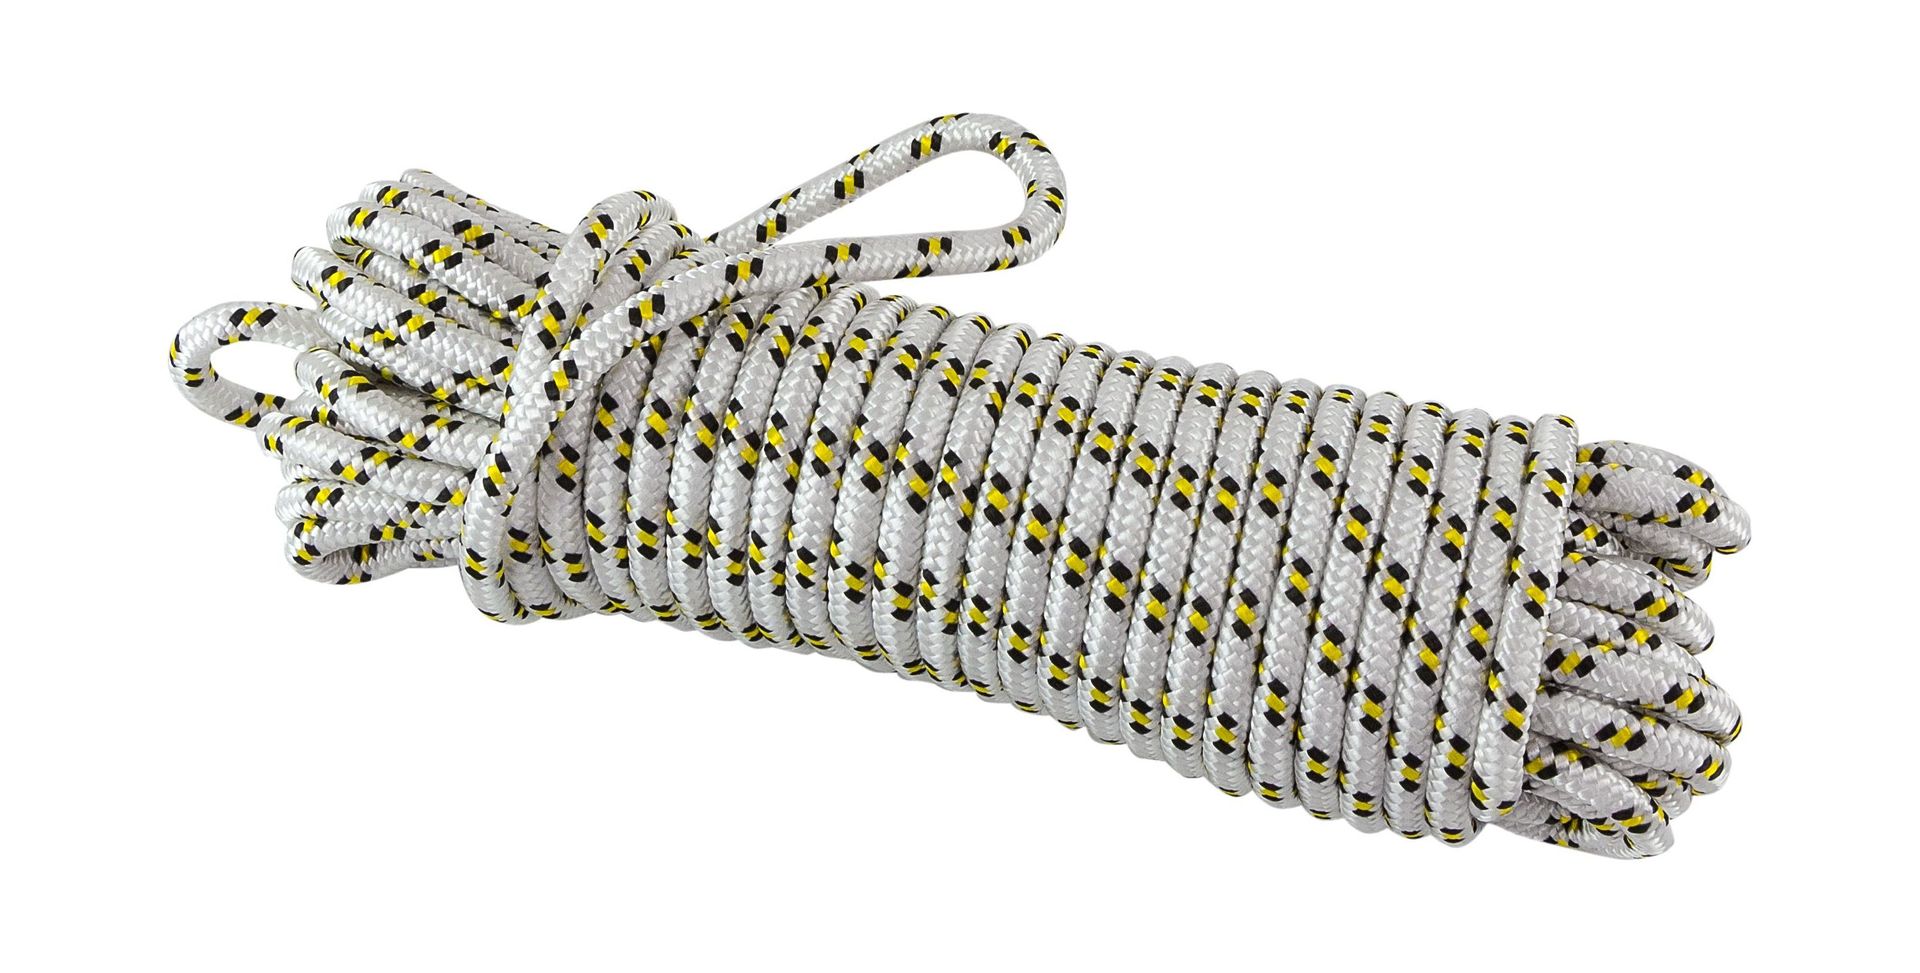 Шнур полипропиленовый плетеный d 8 мм, L 20 м SHND8L20 полипропиленовый плетеный канат невский крепеж